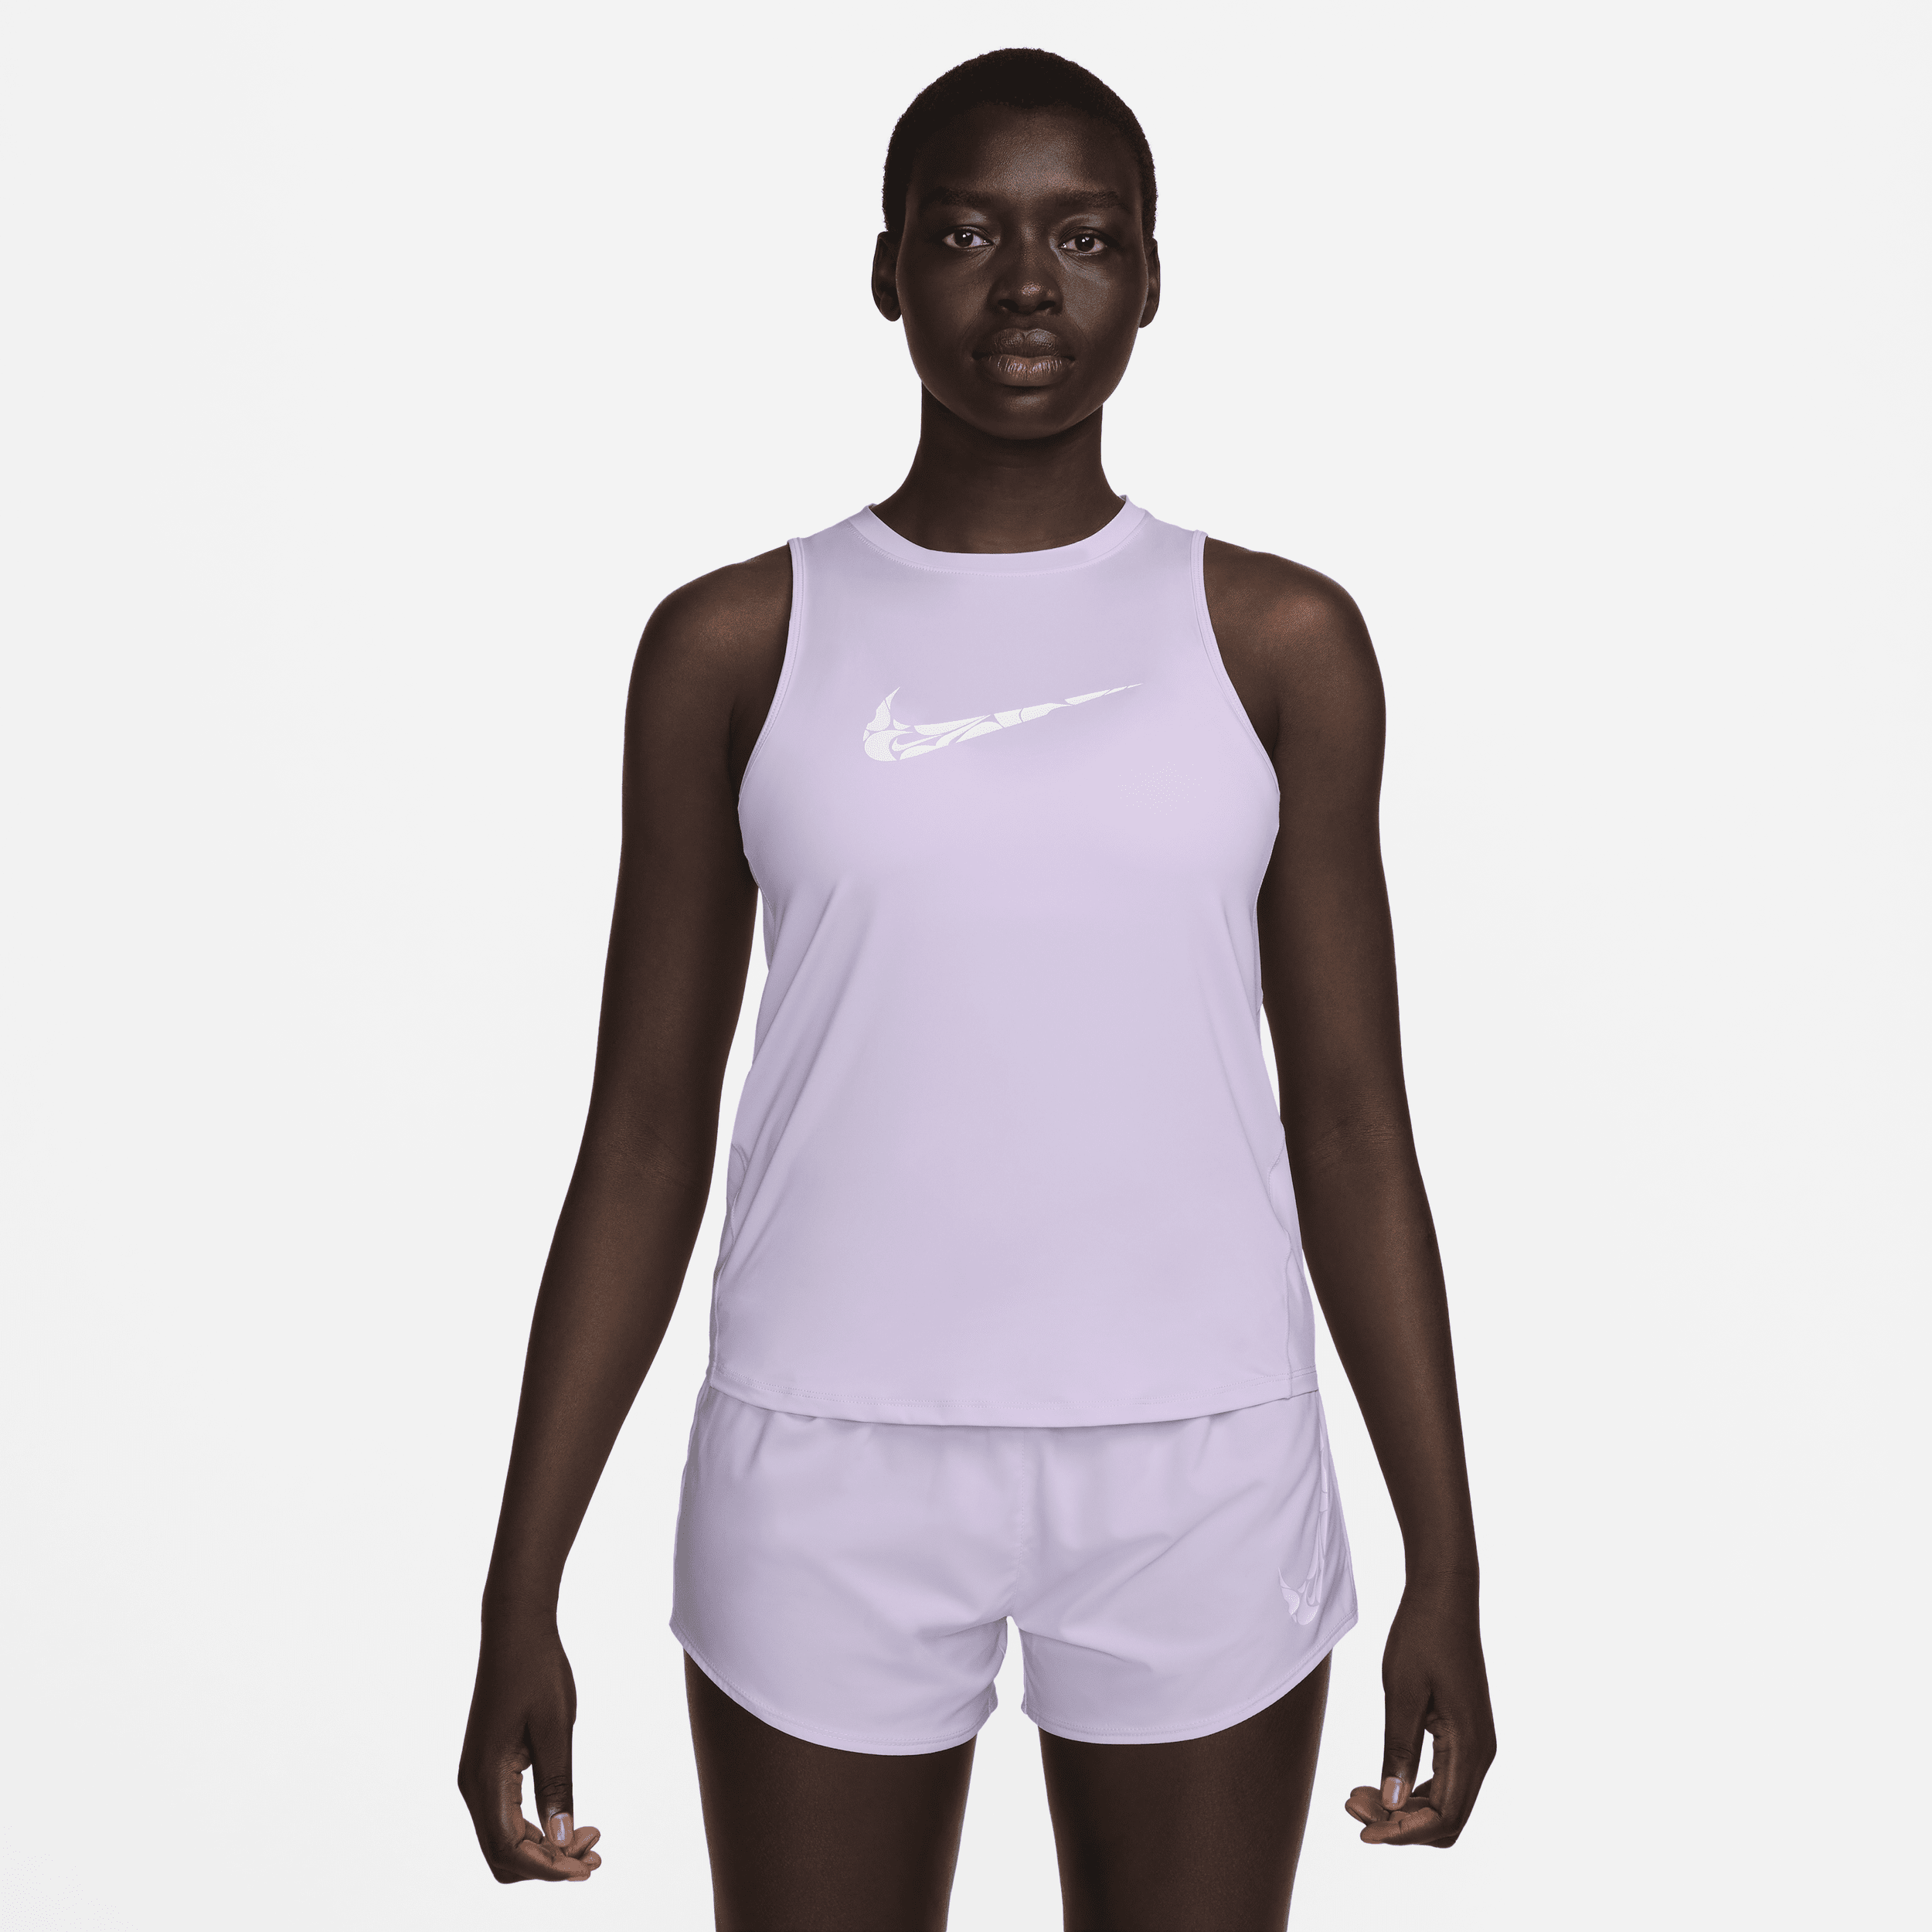 Canotta da running con grafica Nike One – Donna - Viola